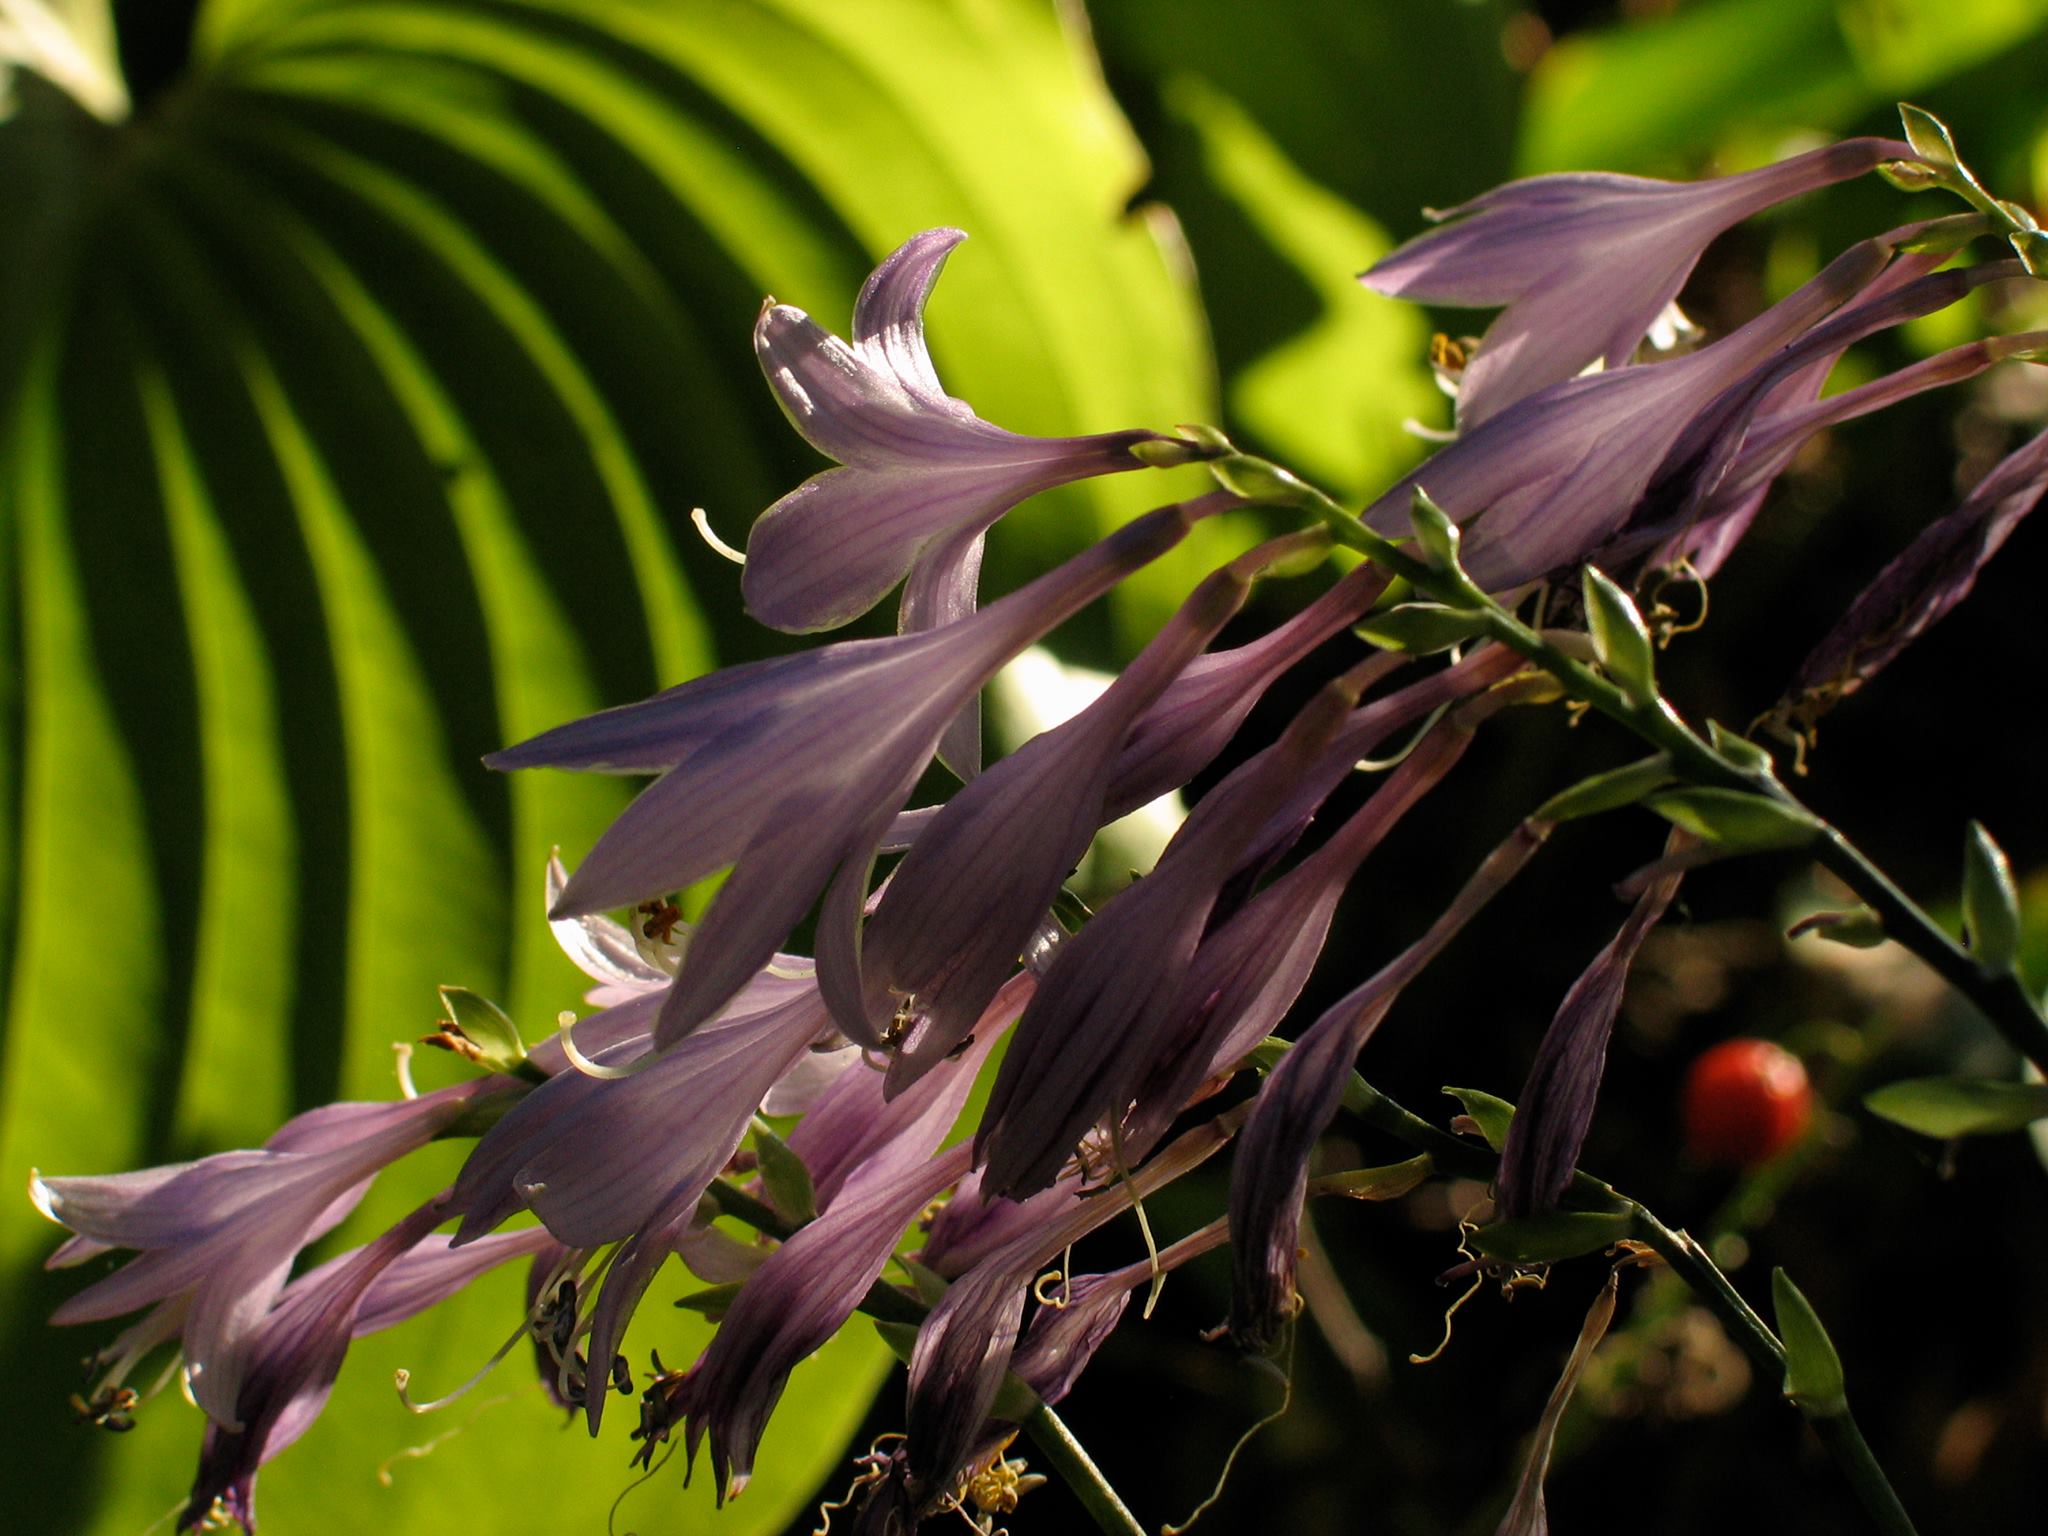 Purple Hosta flowers in the sun